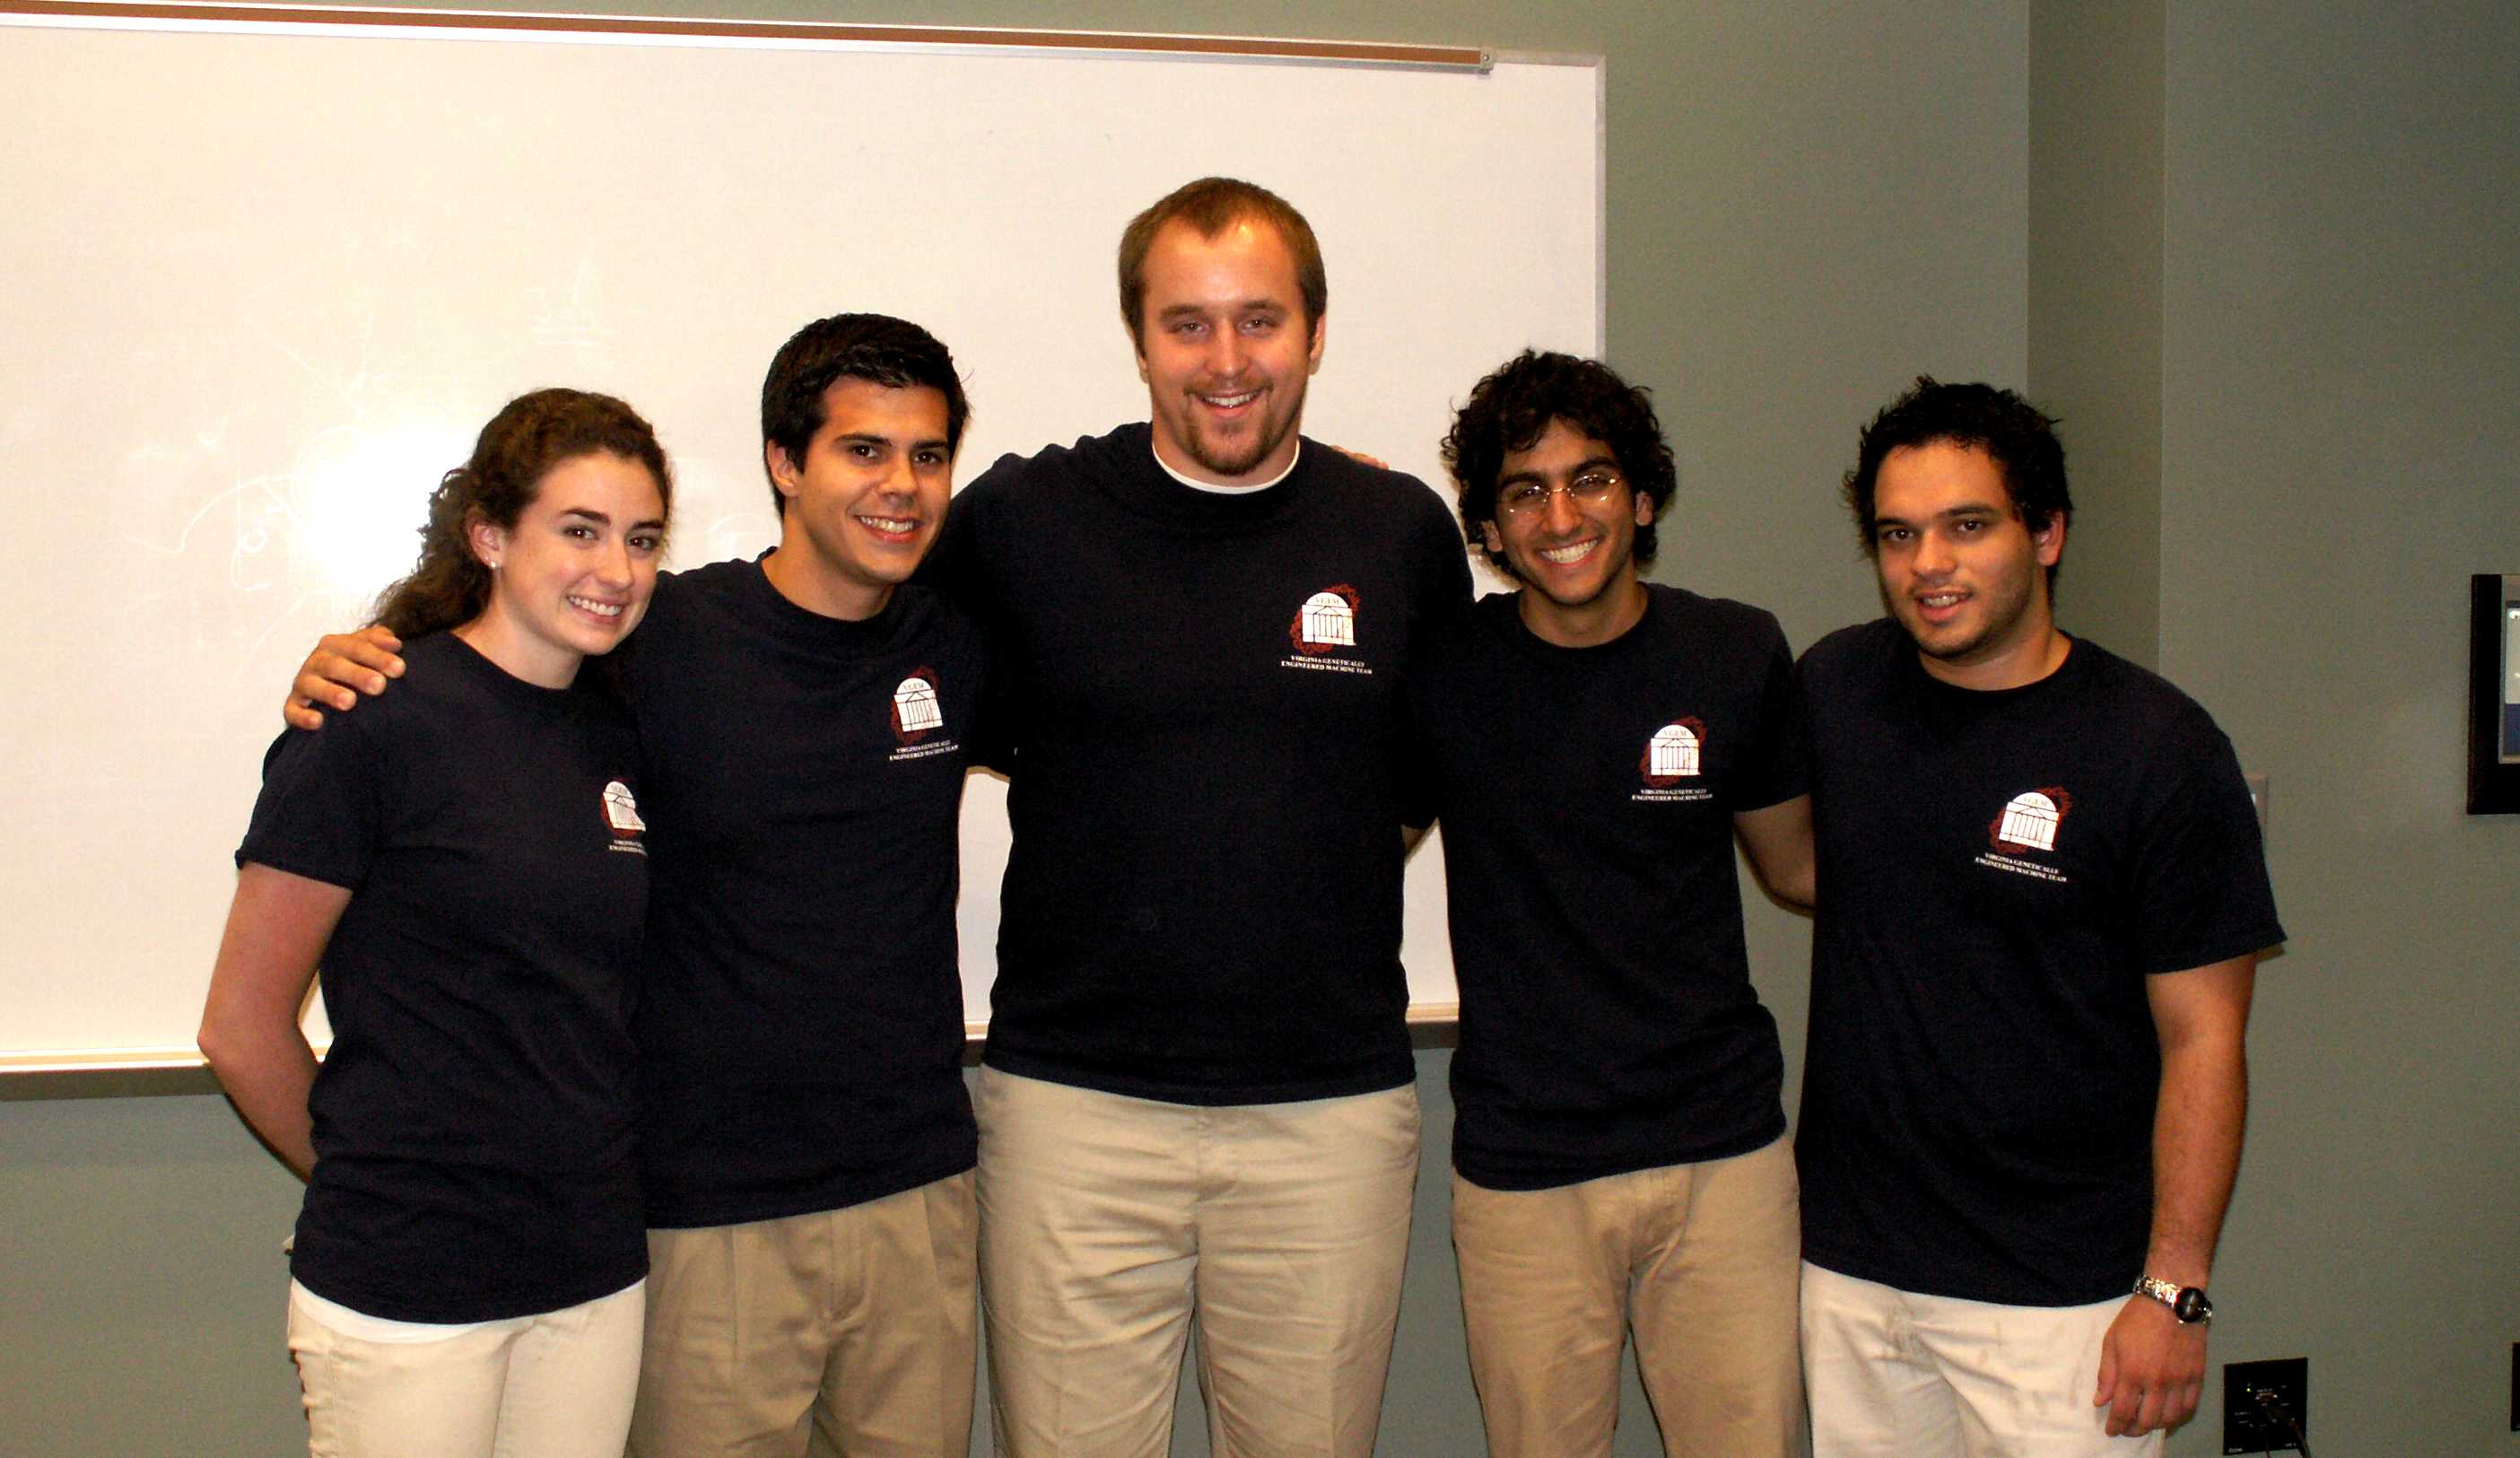 The 2007 VGEM Team: Amy, George, Kevin, Ranjan, and Emre